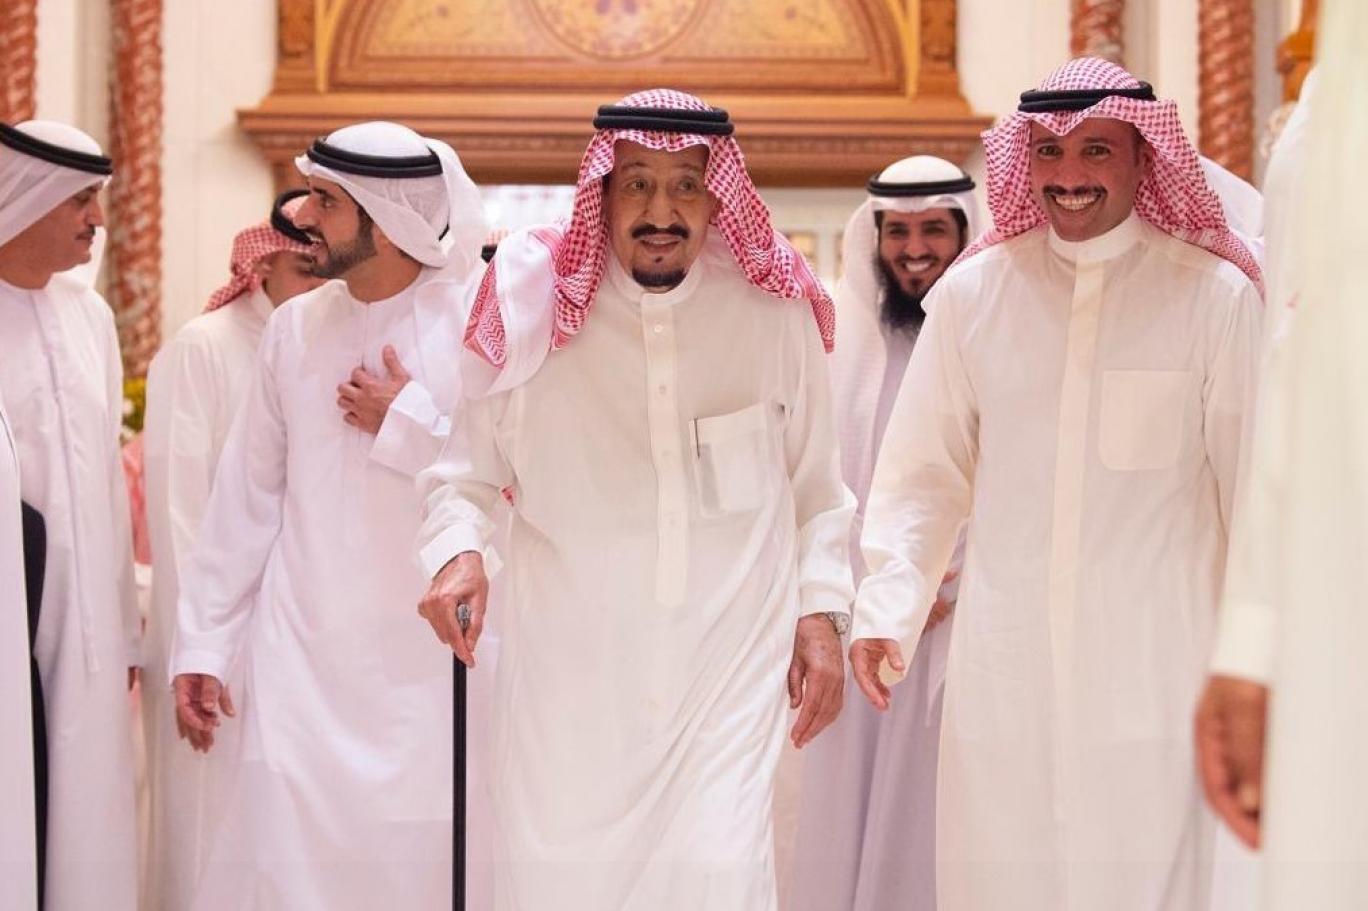 Новости дубая на сегодня на русском. Шейх Дубая Абдулазиз. Дворец принца в Дубае. Одежда шейха. Одежда арабских шейхов.